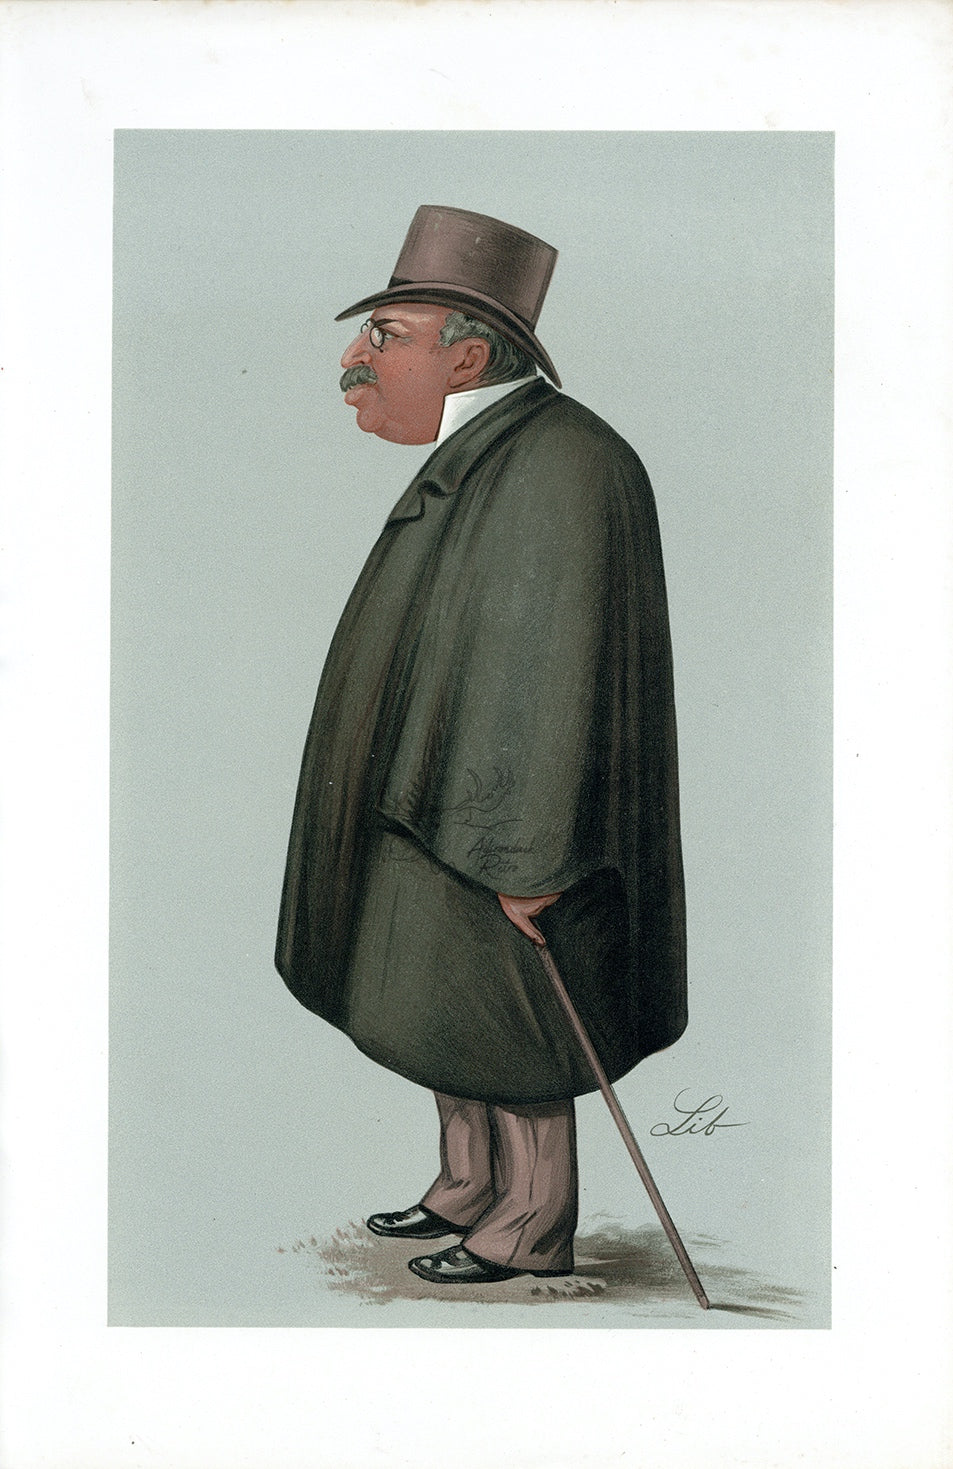 1889 Vanity Fair Caricature Proof Plate by Lib - Mr. John Corlett Spy Print